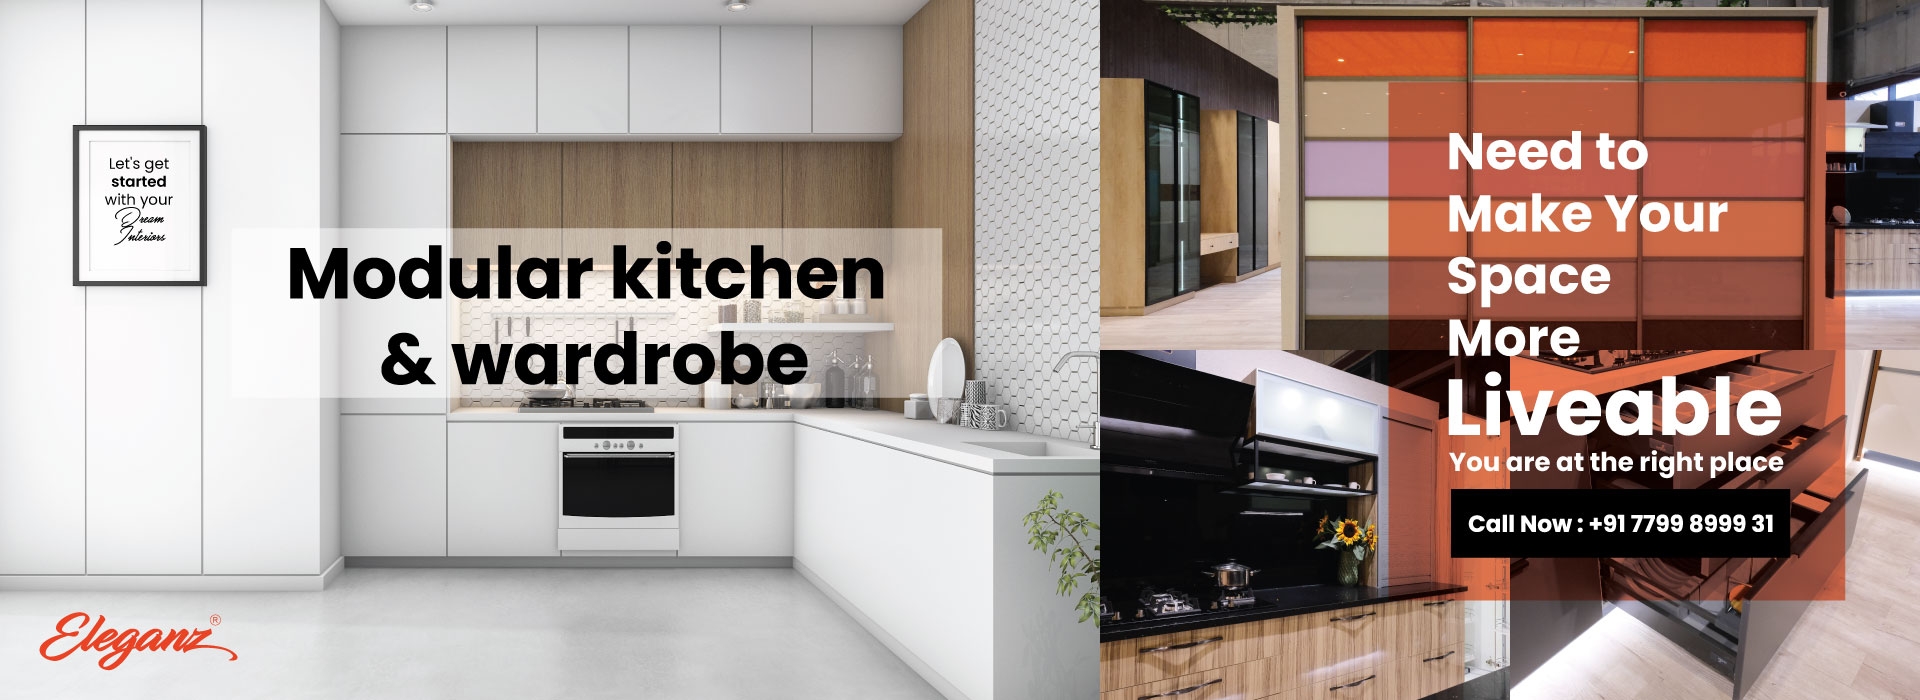 modular kitchen and wardrobe